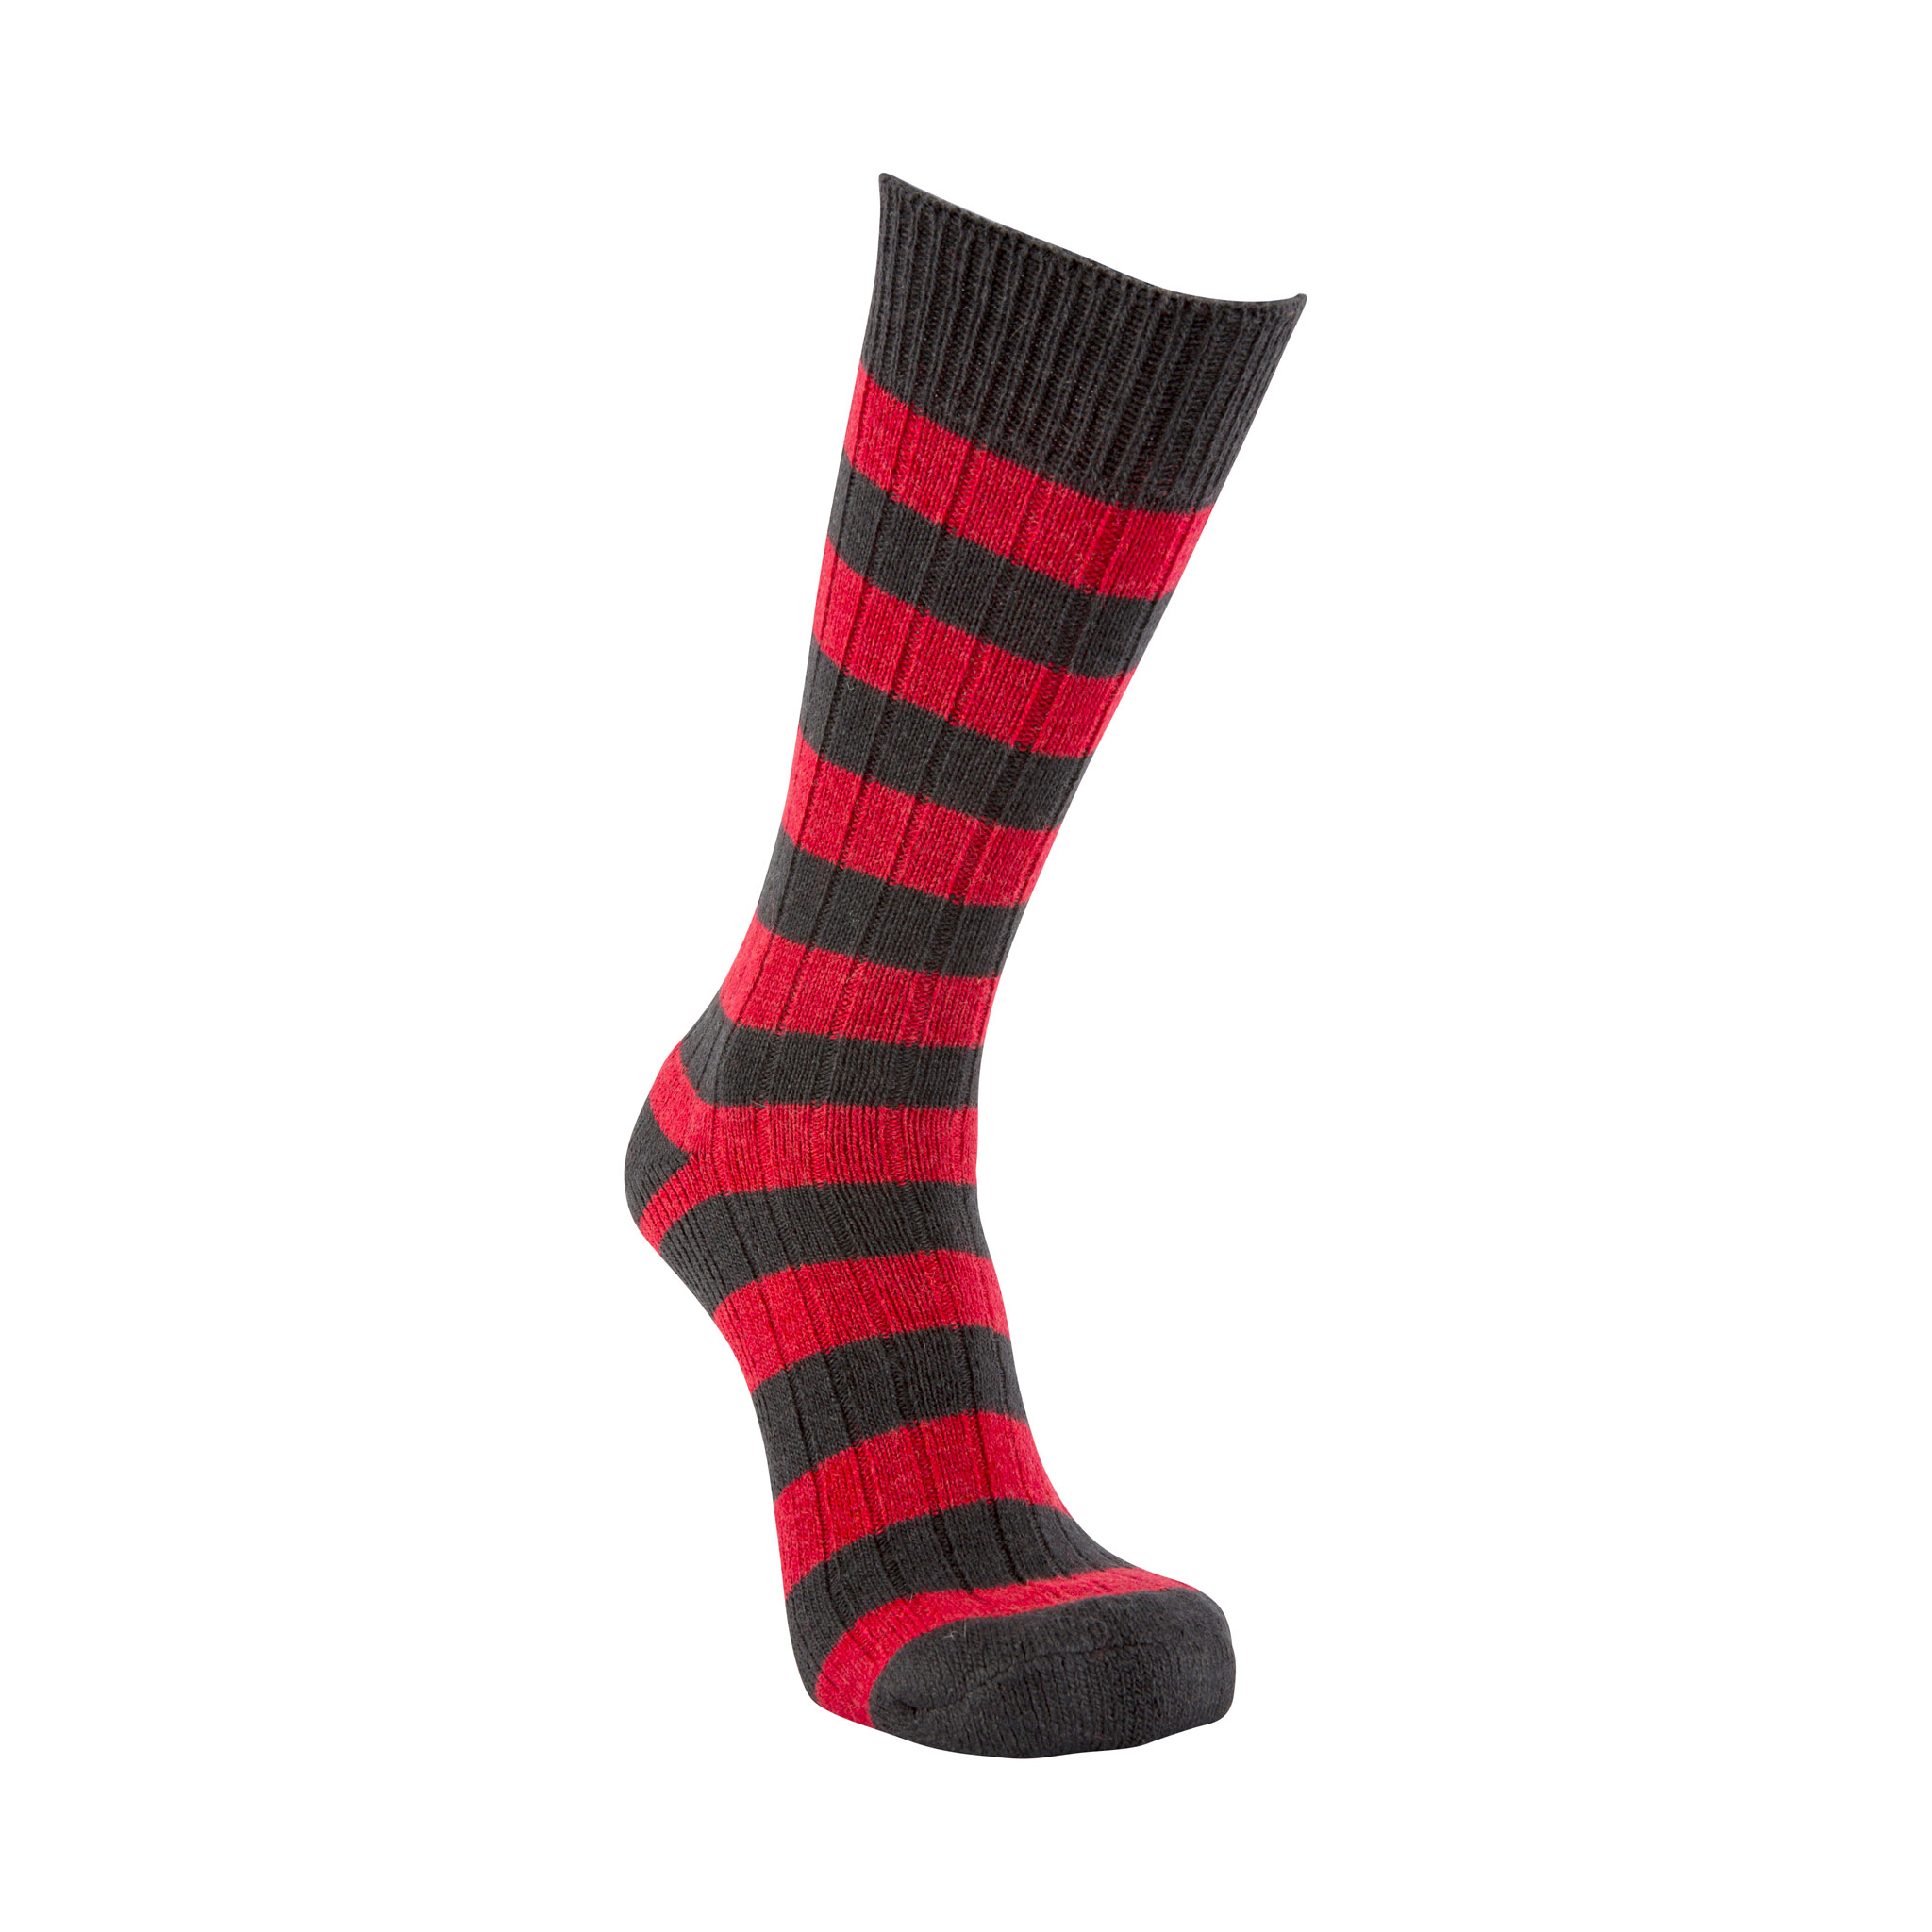 Merino Wool black and red stripe sock